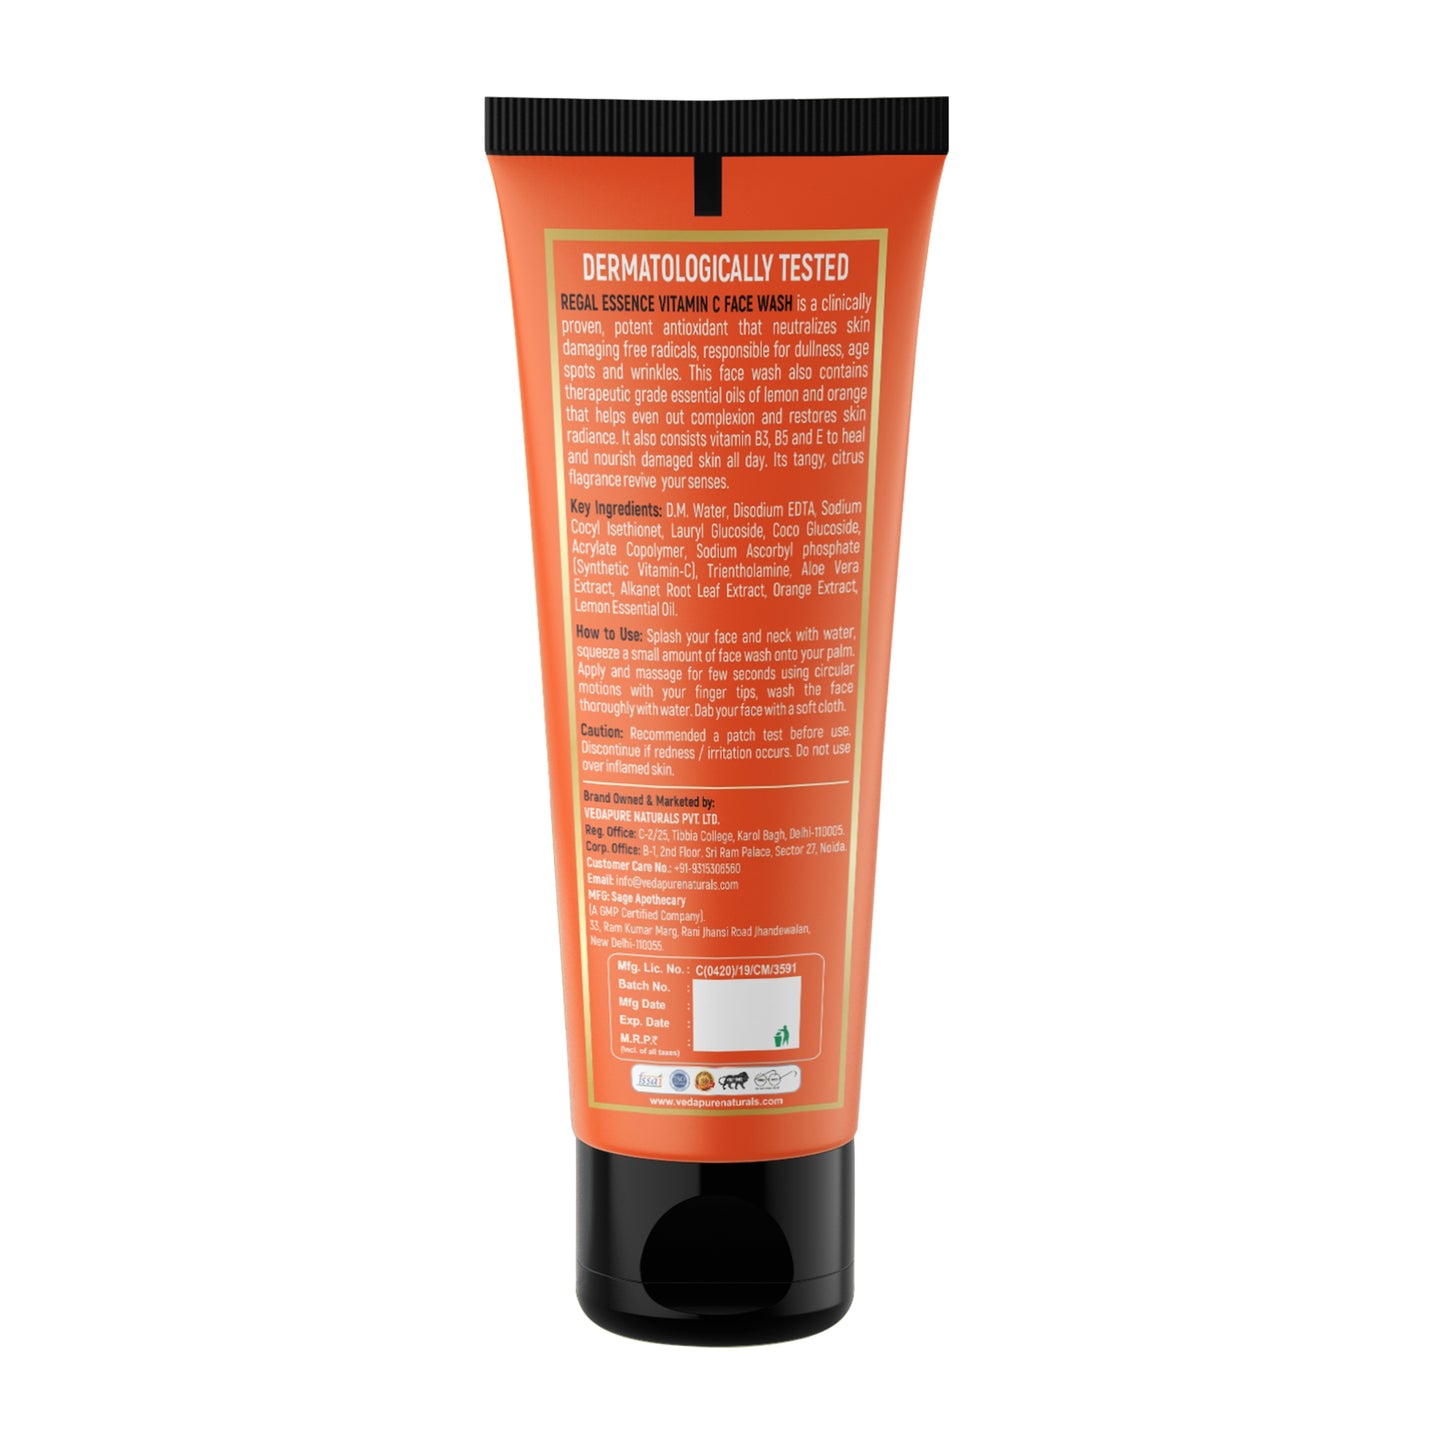 Regal Essence Vitamin C Facewash For Skin Brightening or lightening -100ml Regal Essence